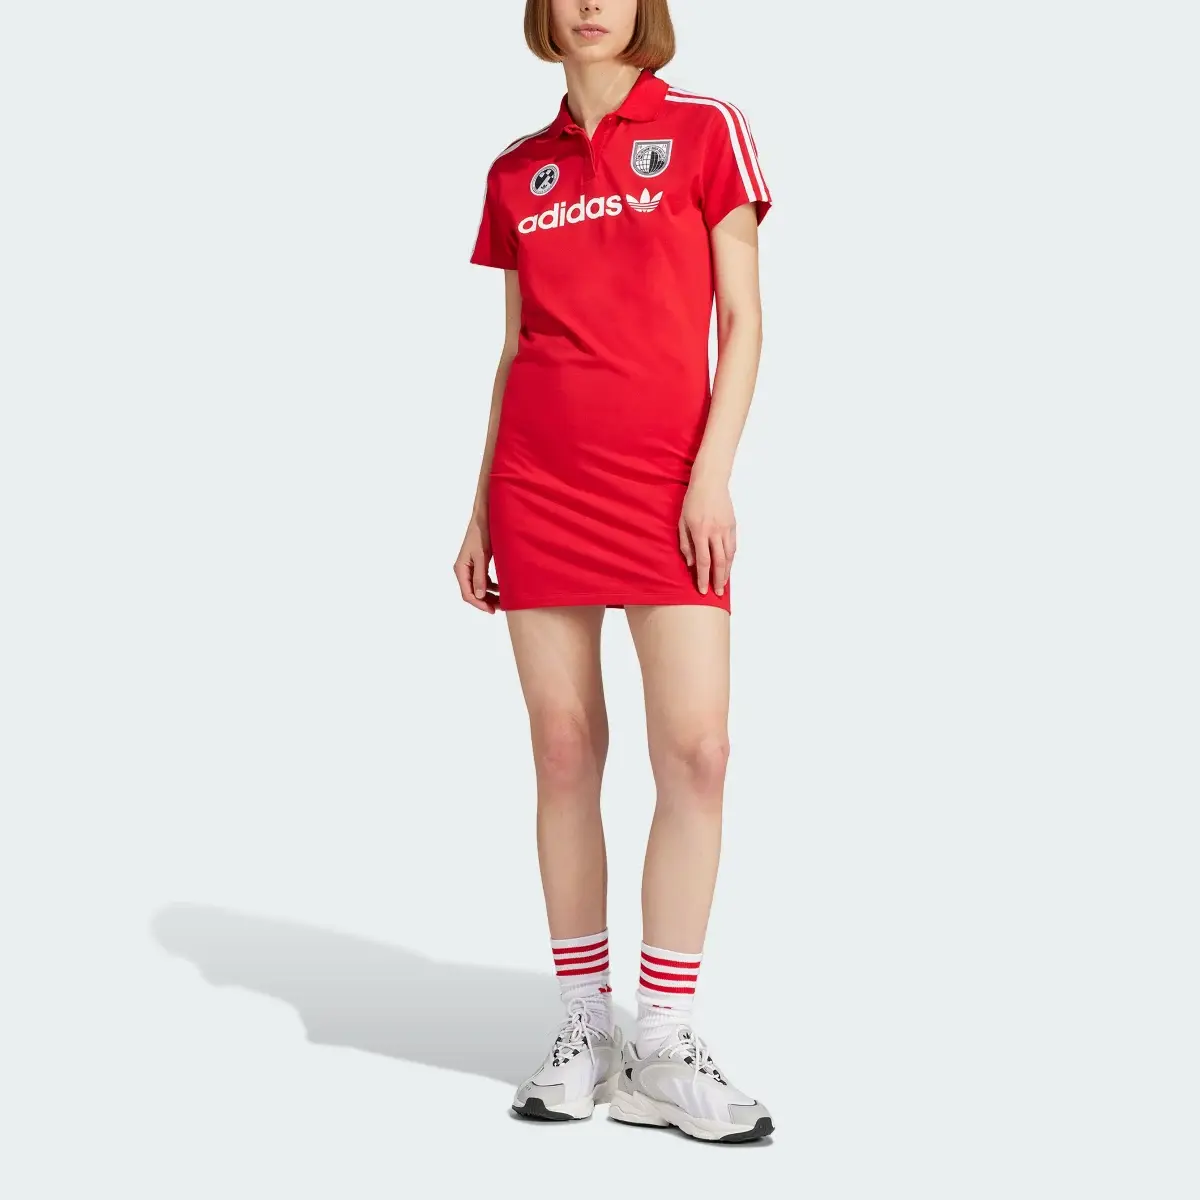 Adidas Football Dress. 1